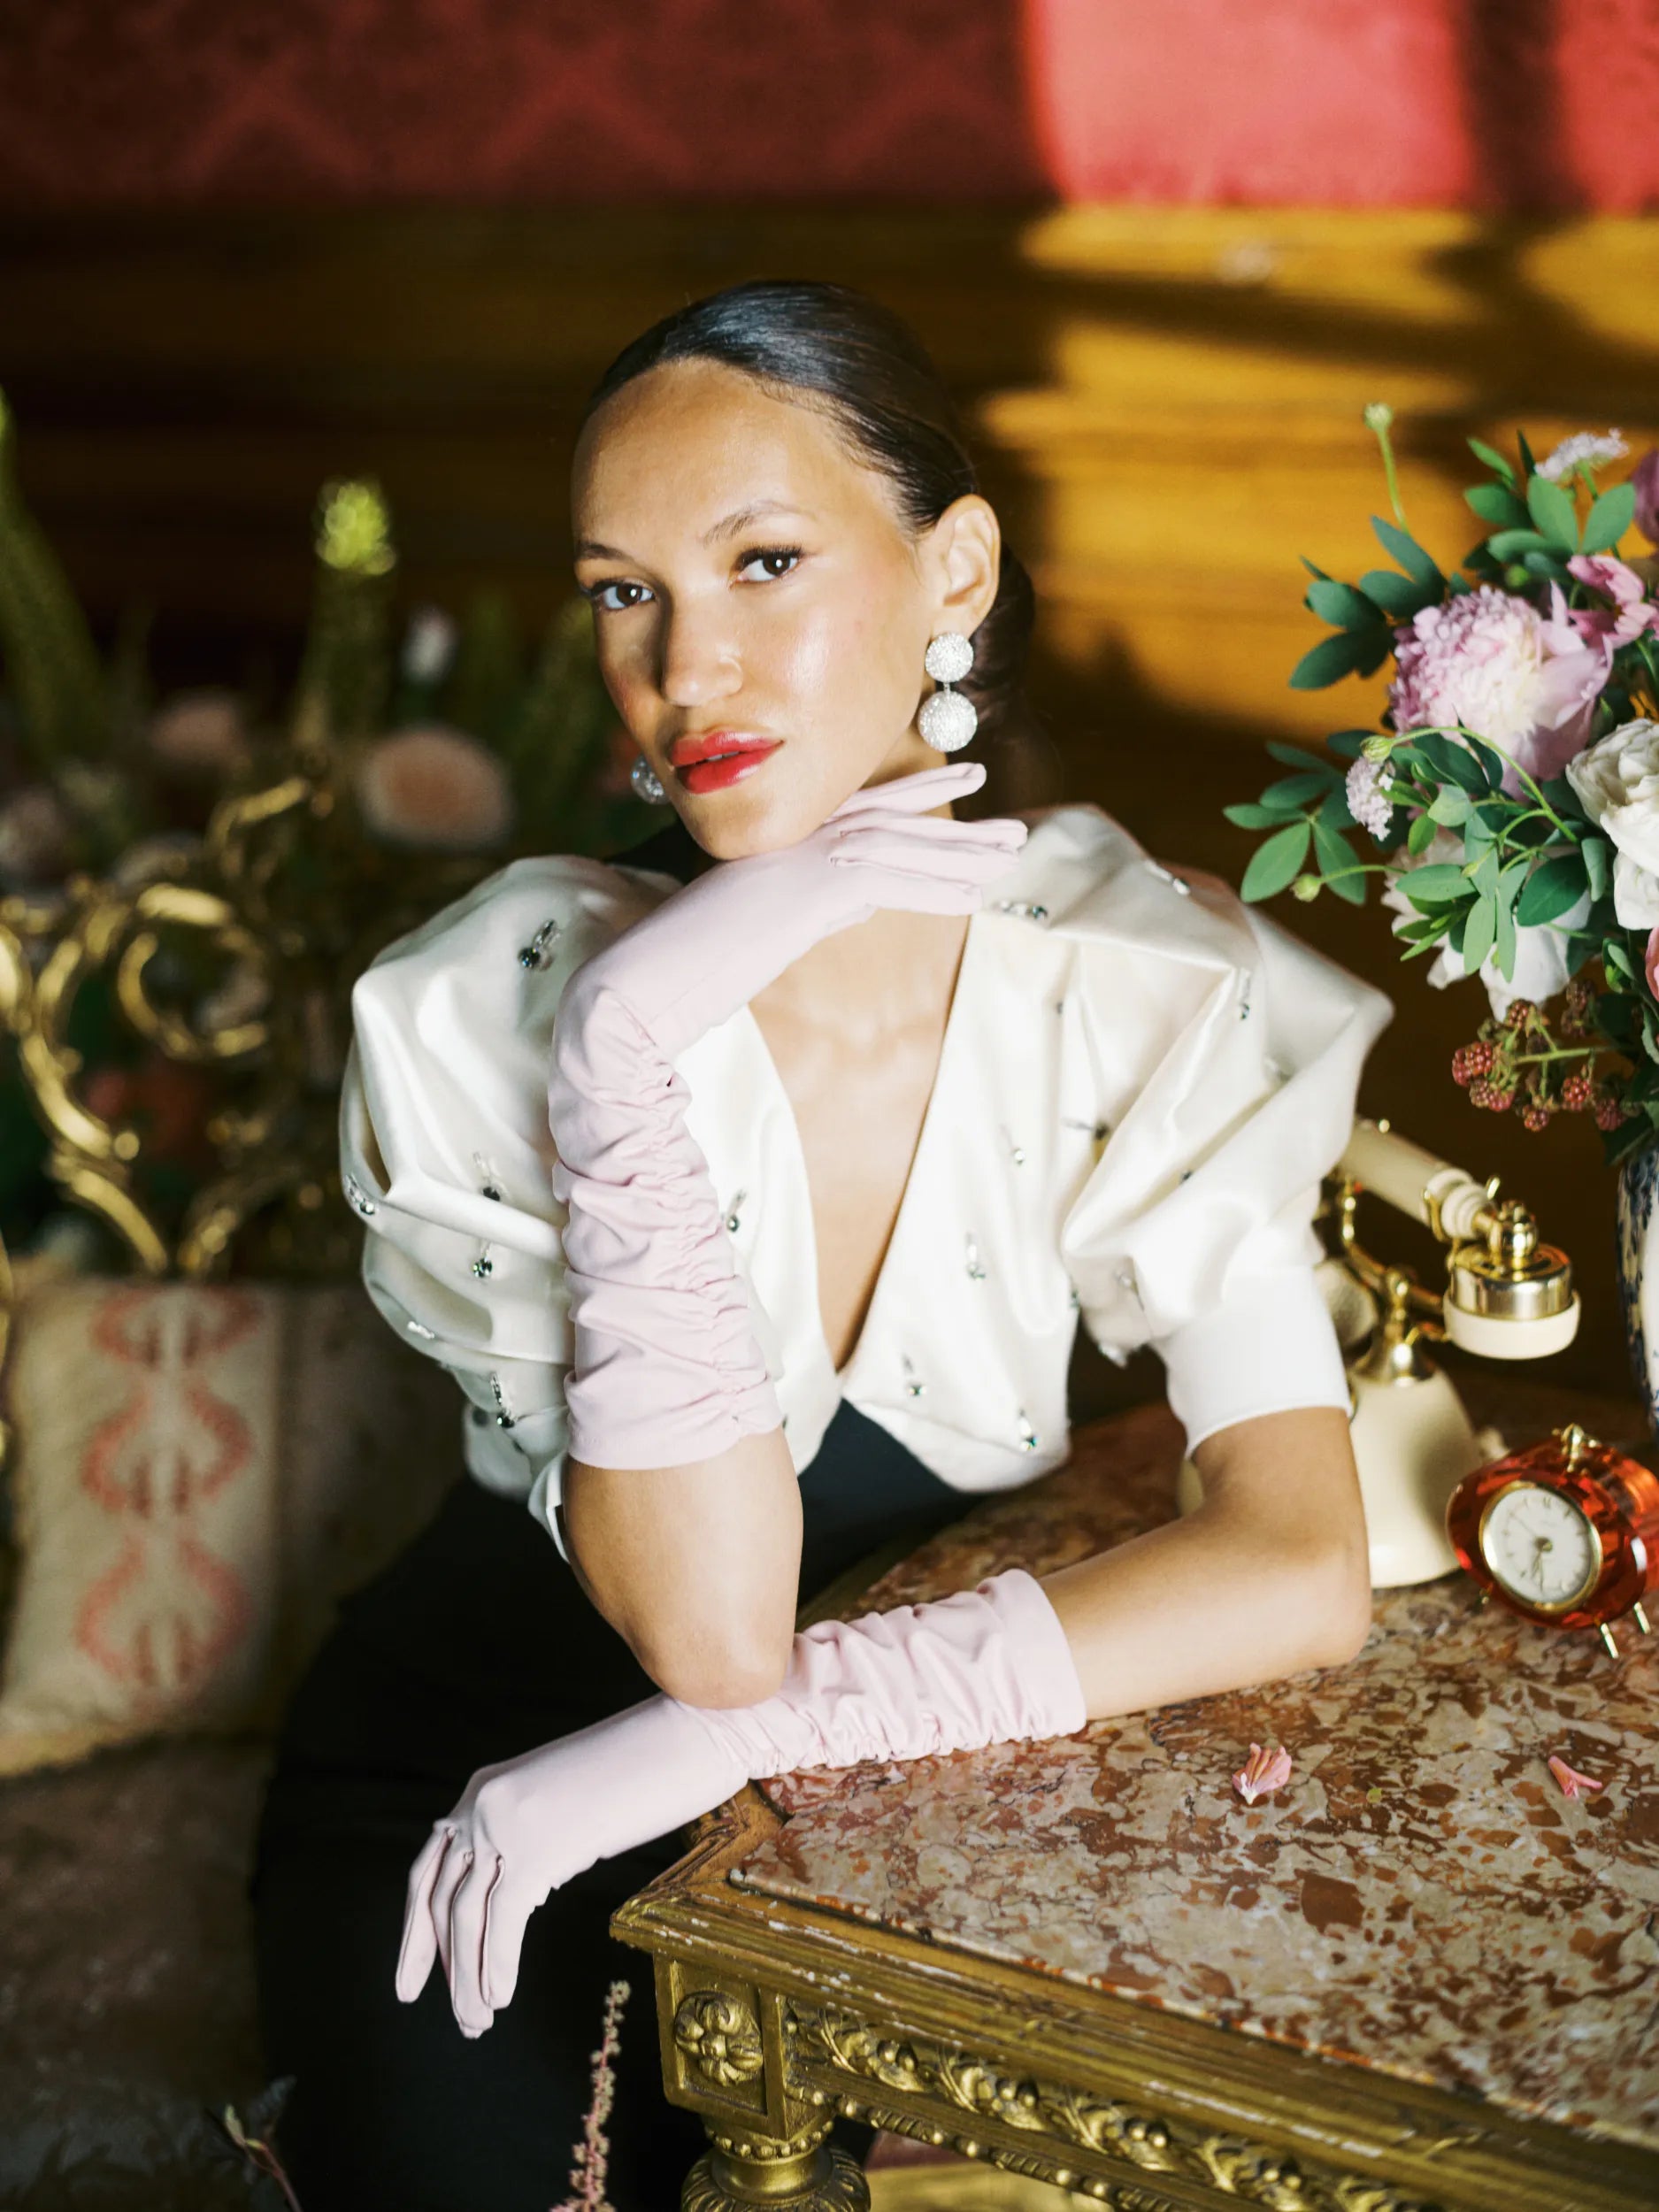 An elegant woman sitting at vintage table wearing pink elbow gloves.